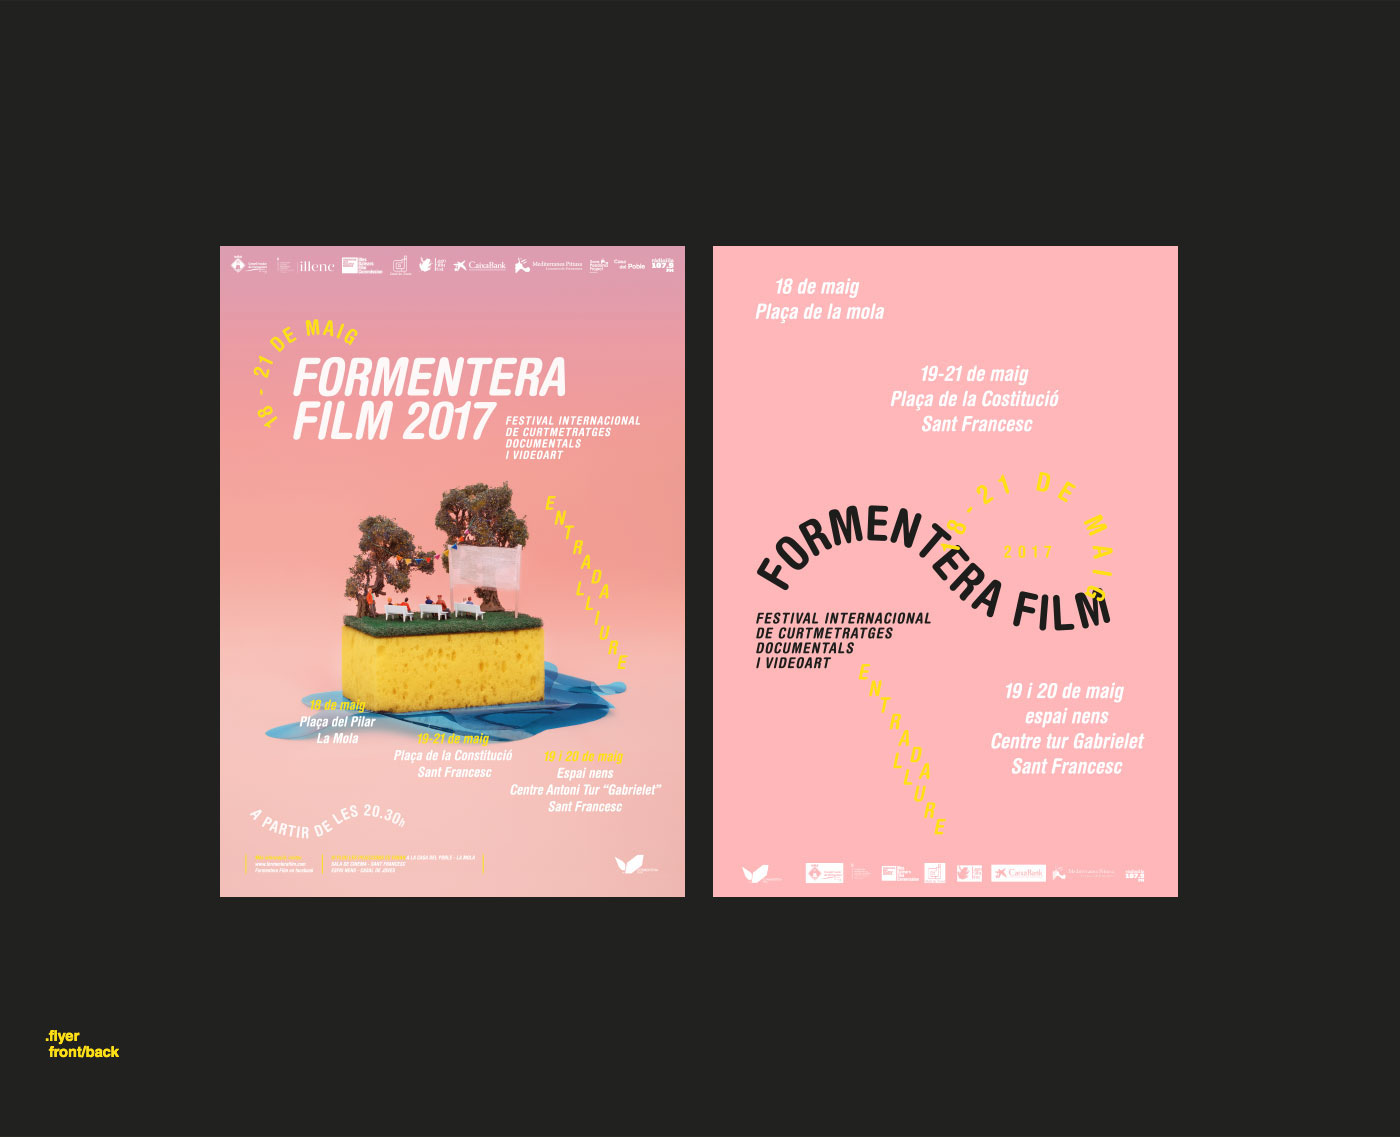 festival formentera Film   movie pink Island Sponge still life poster merchandising